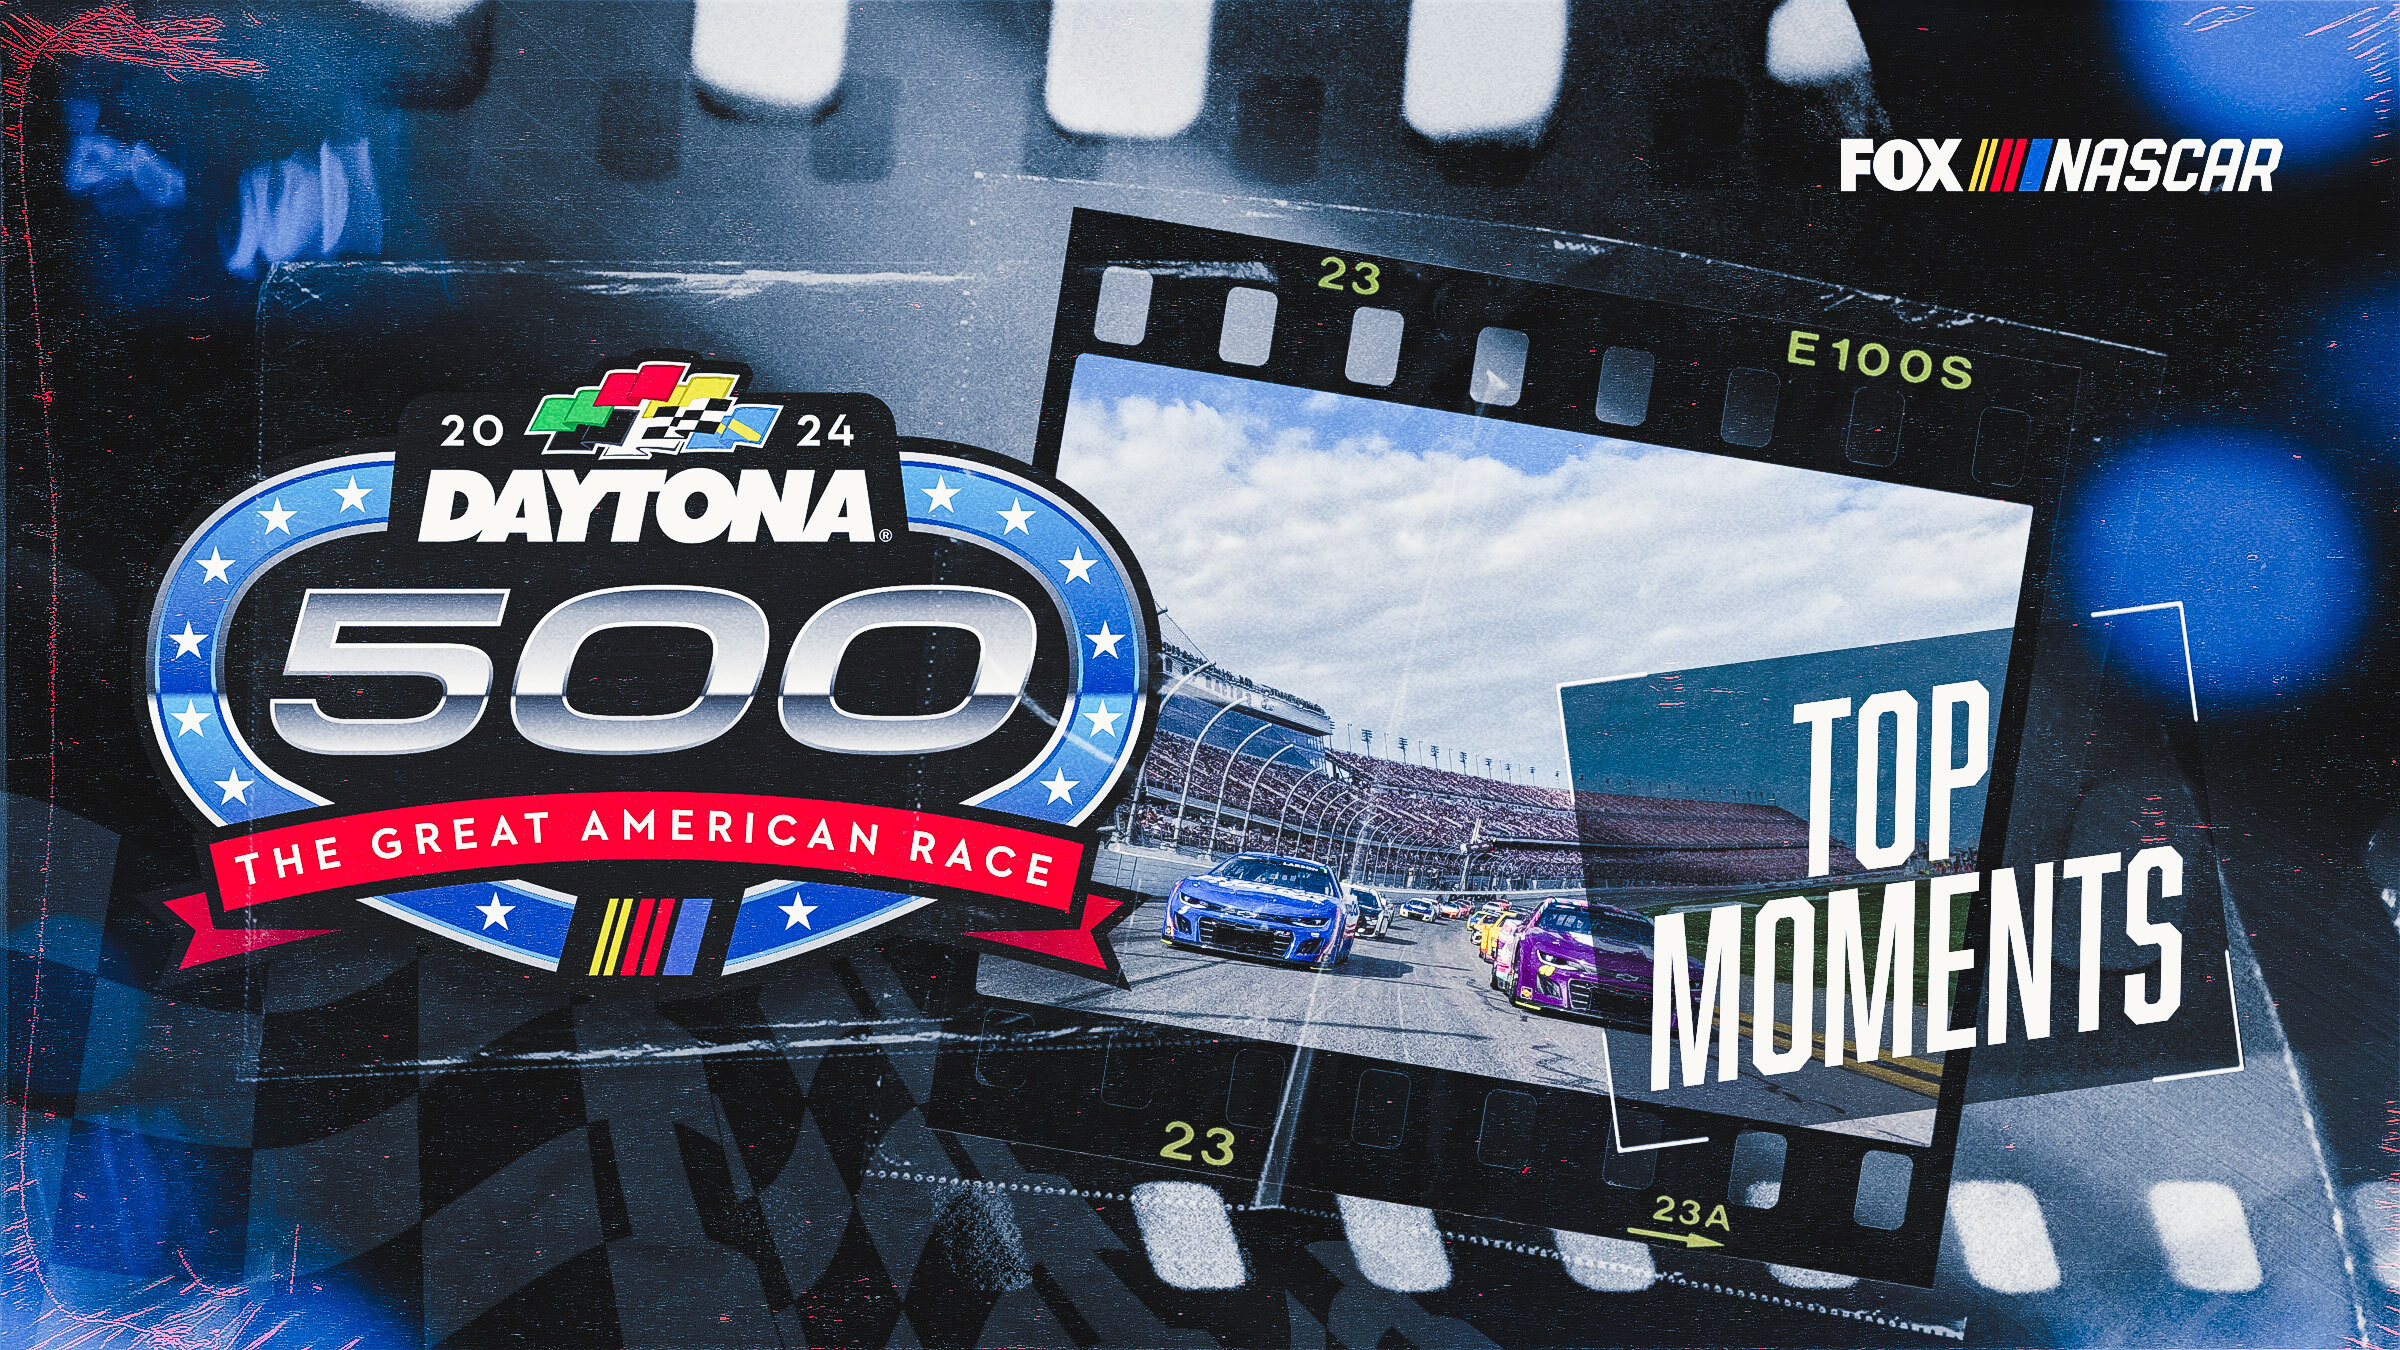 NASCAR live updates: Top moments from Daytona 500